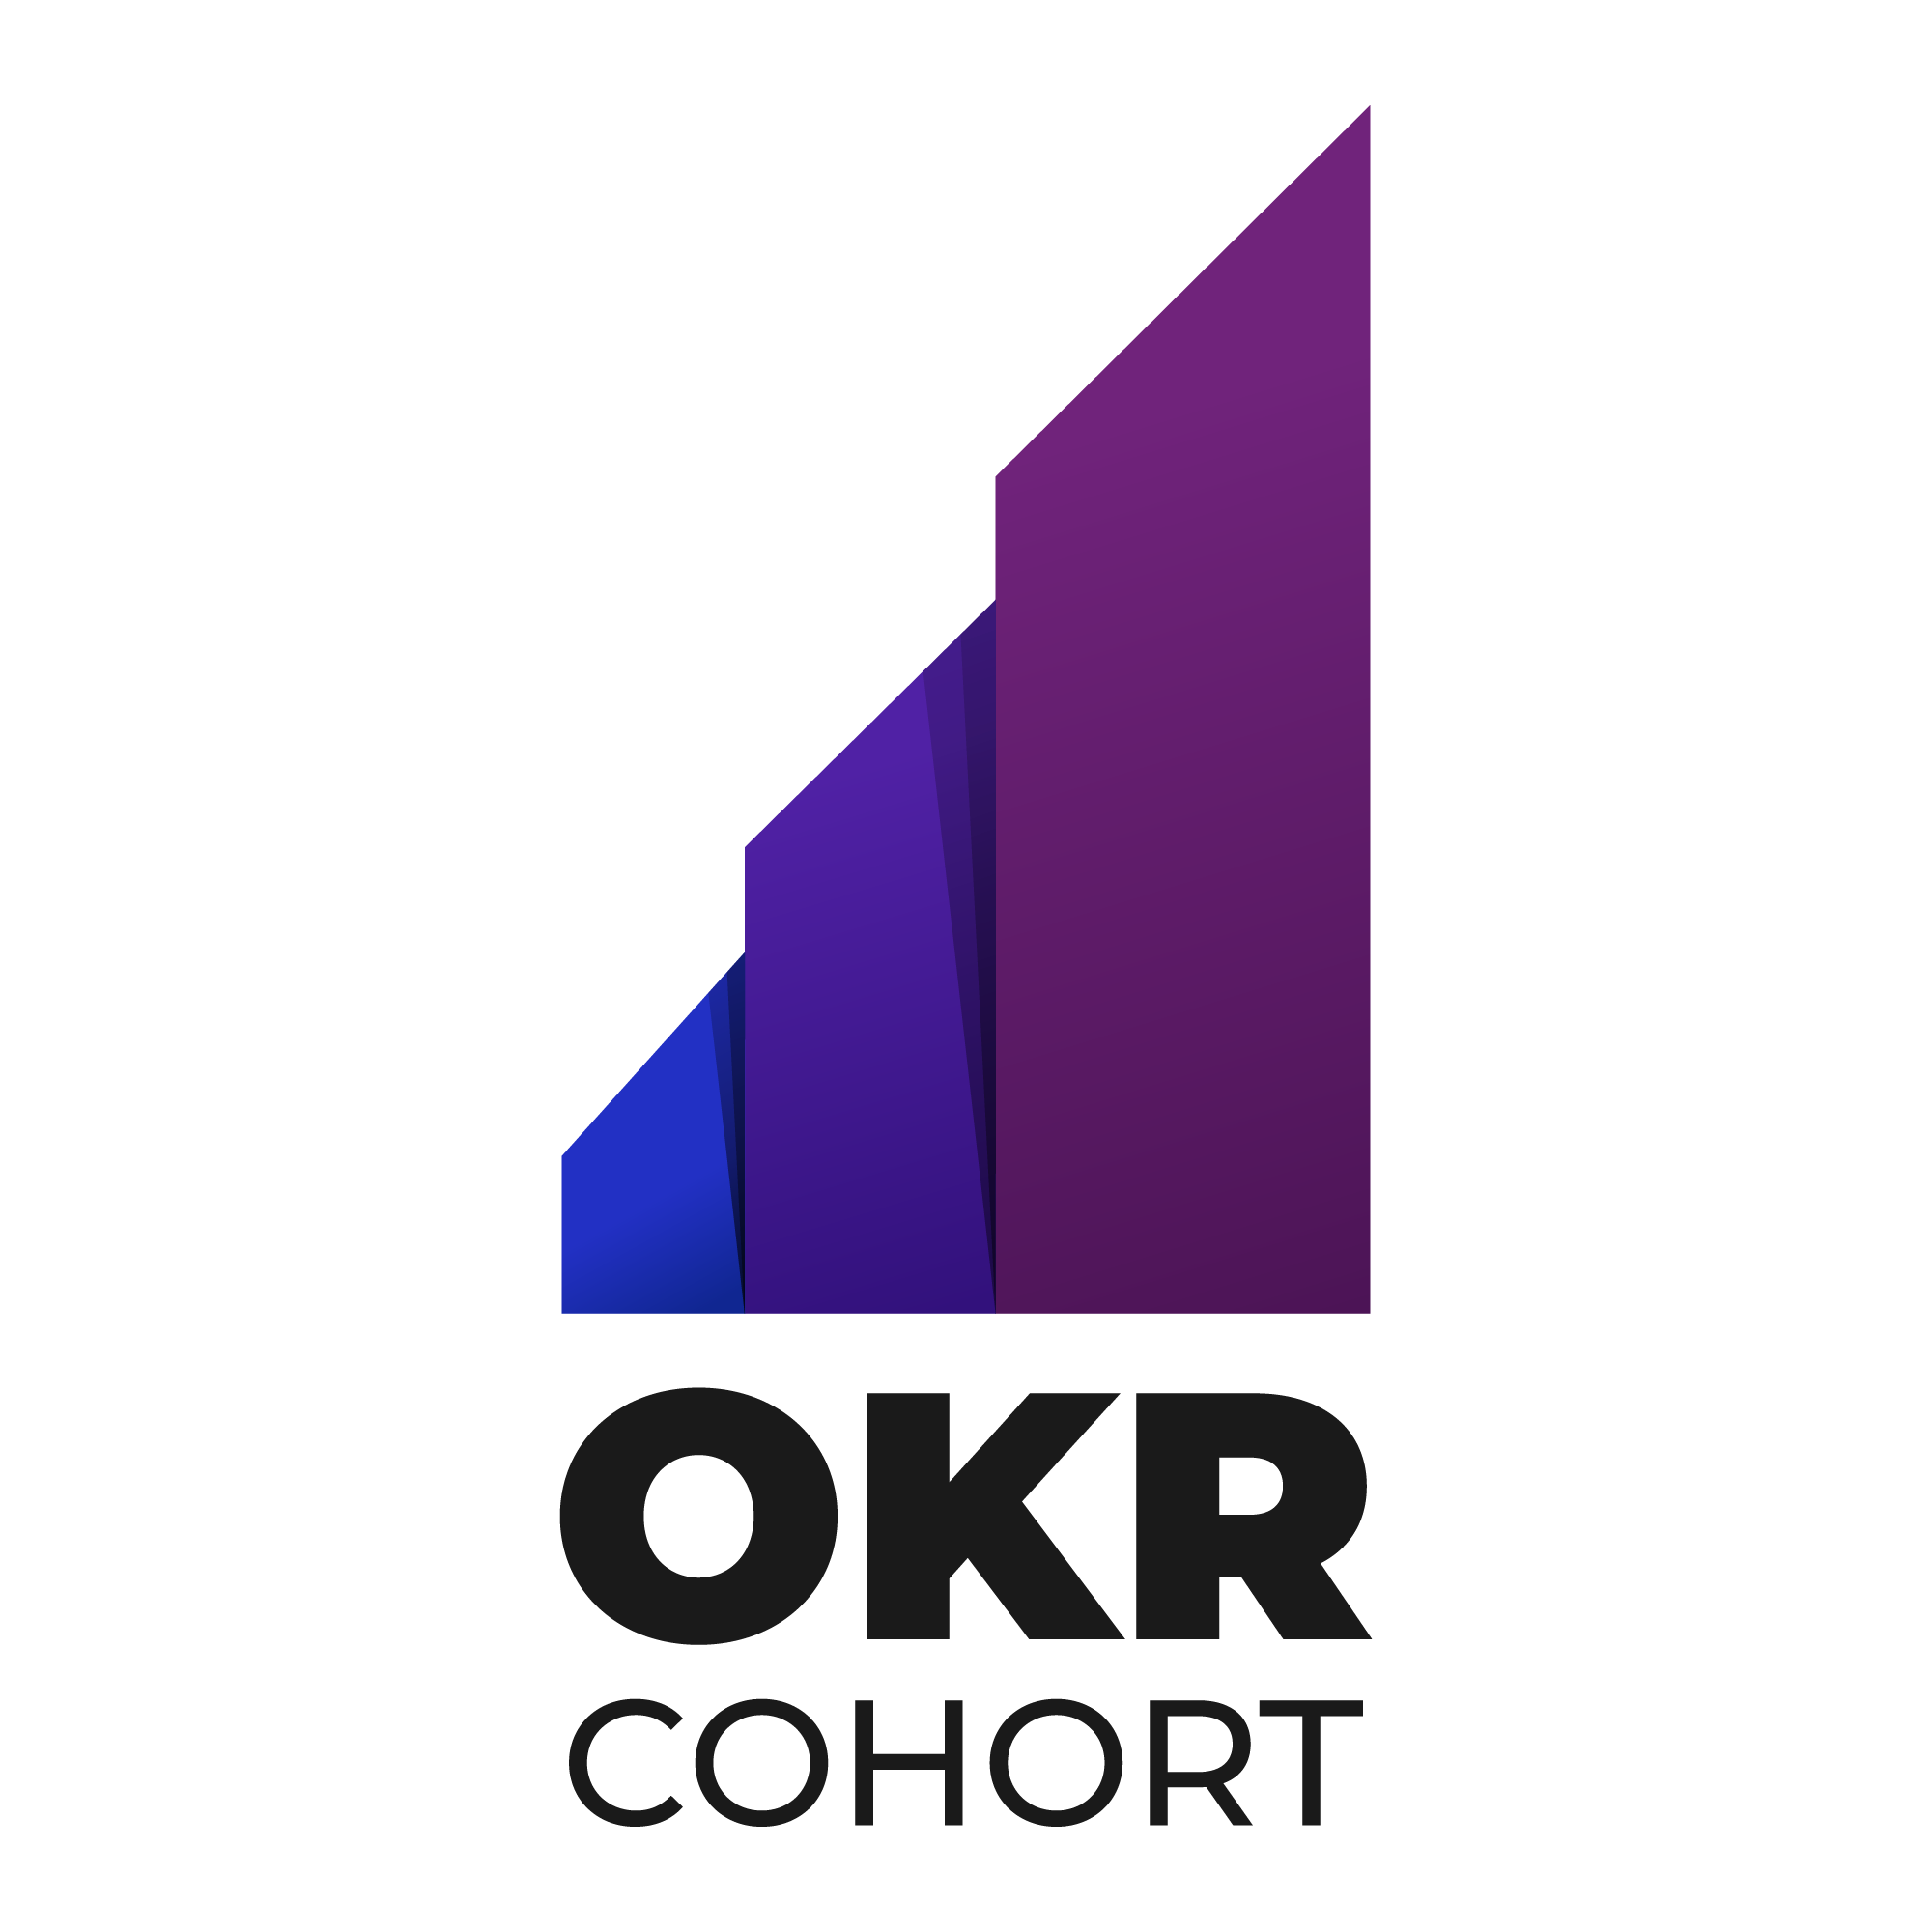 OKR Cohort